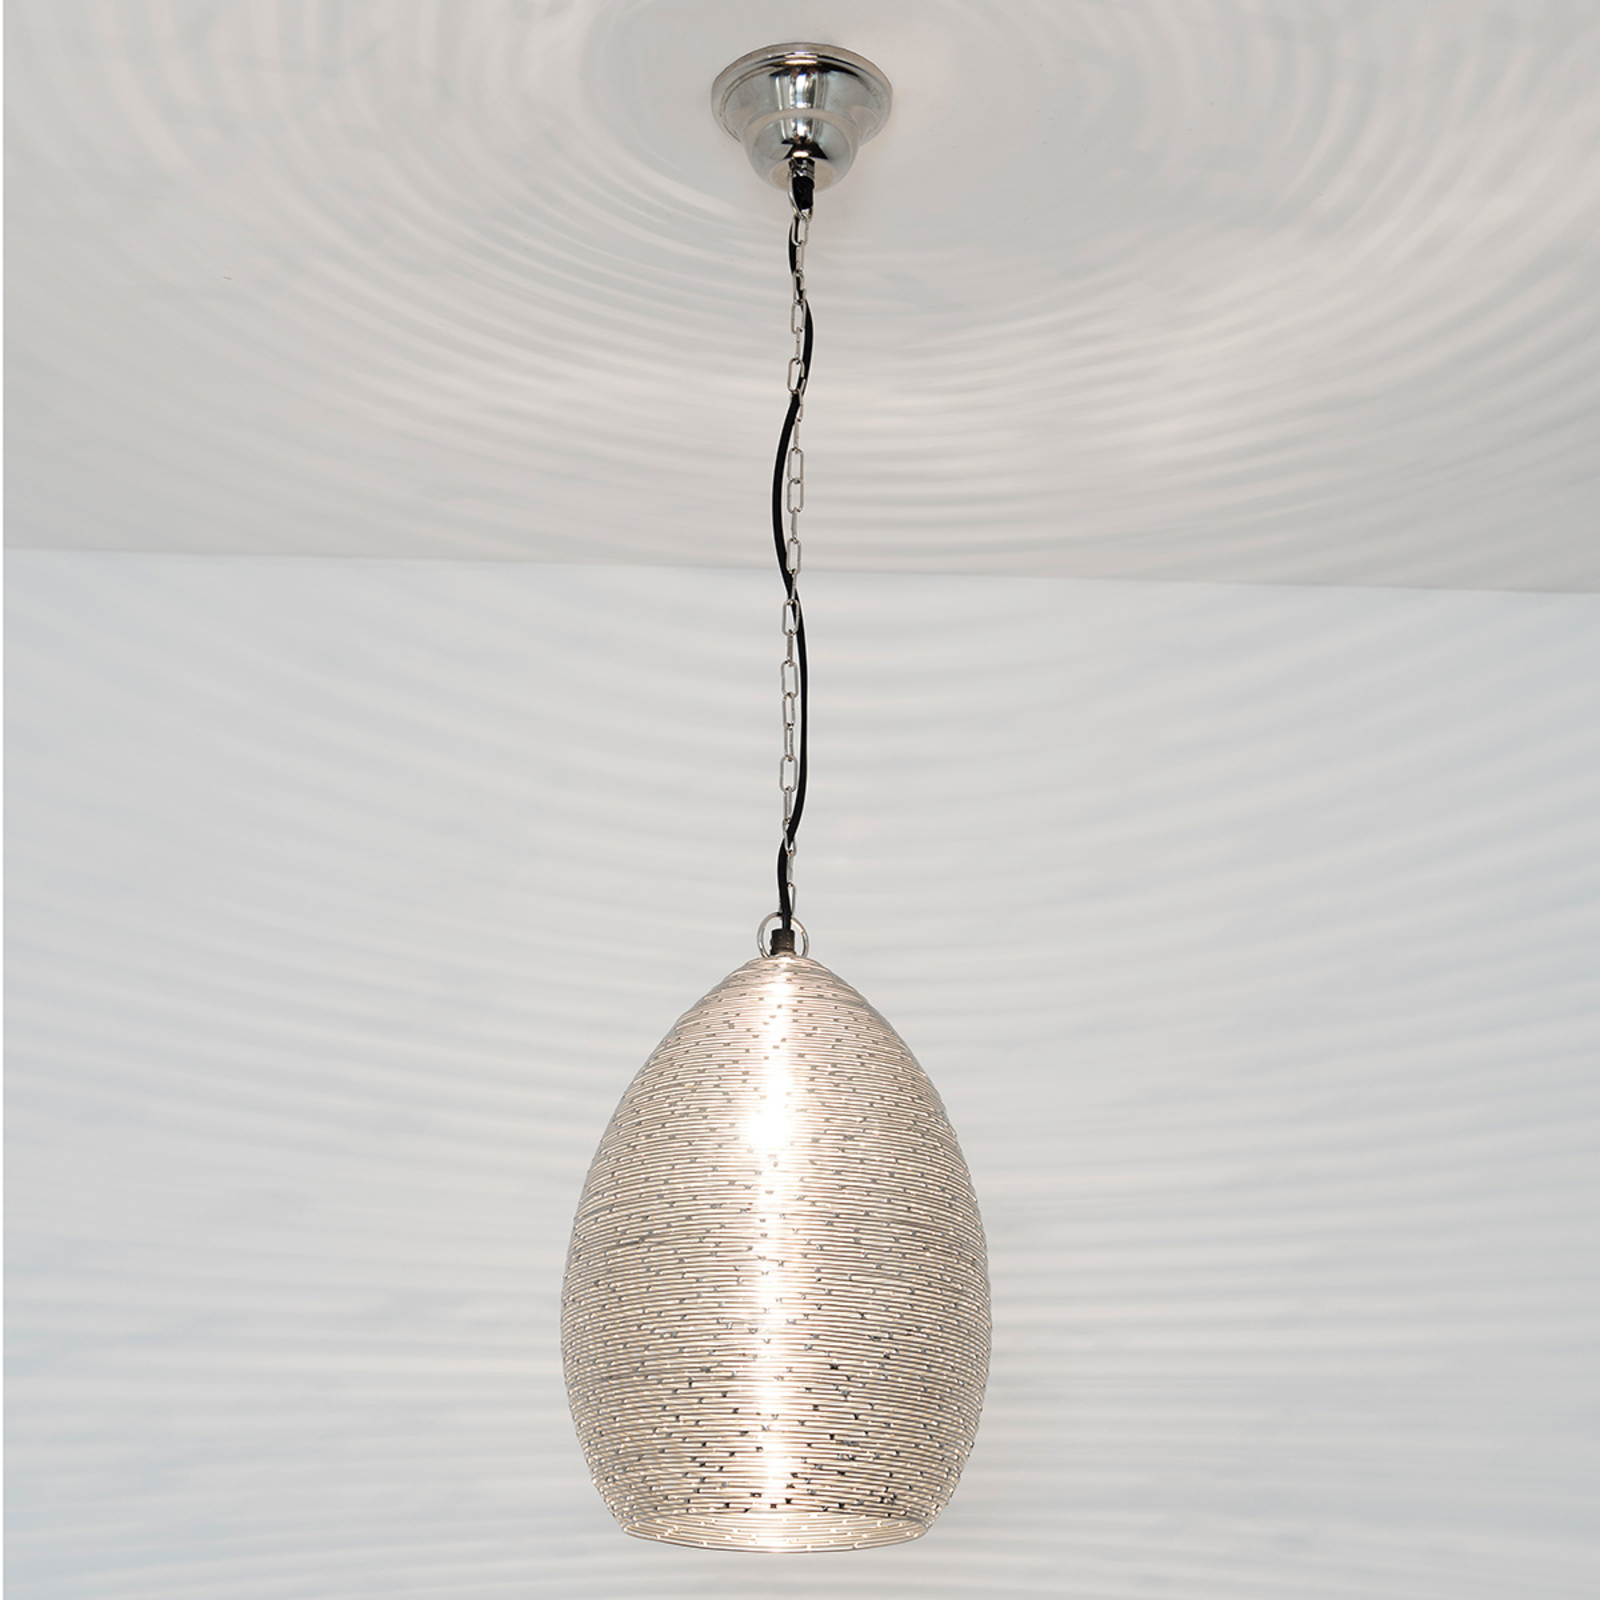 Steel hanging lamp Colibri in nickel finish